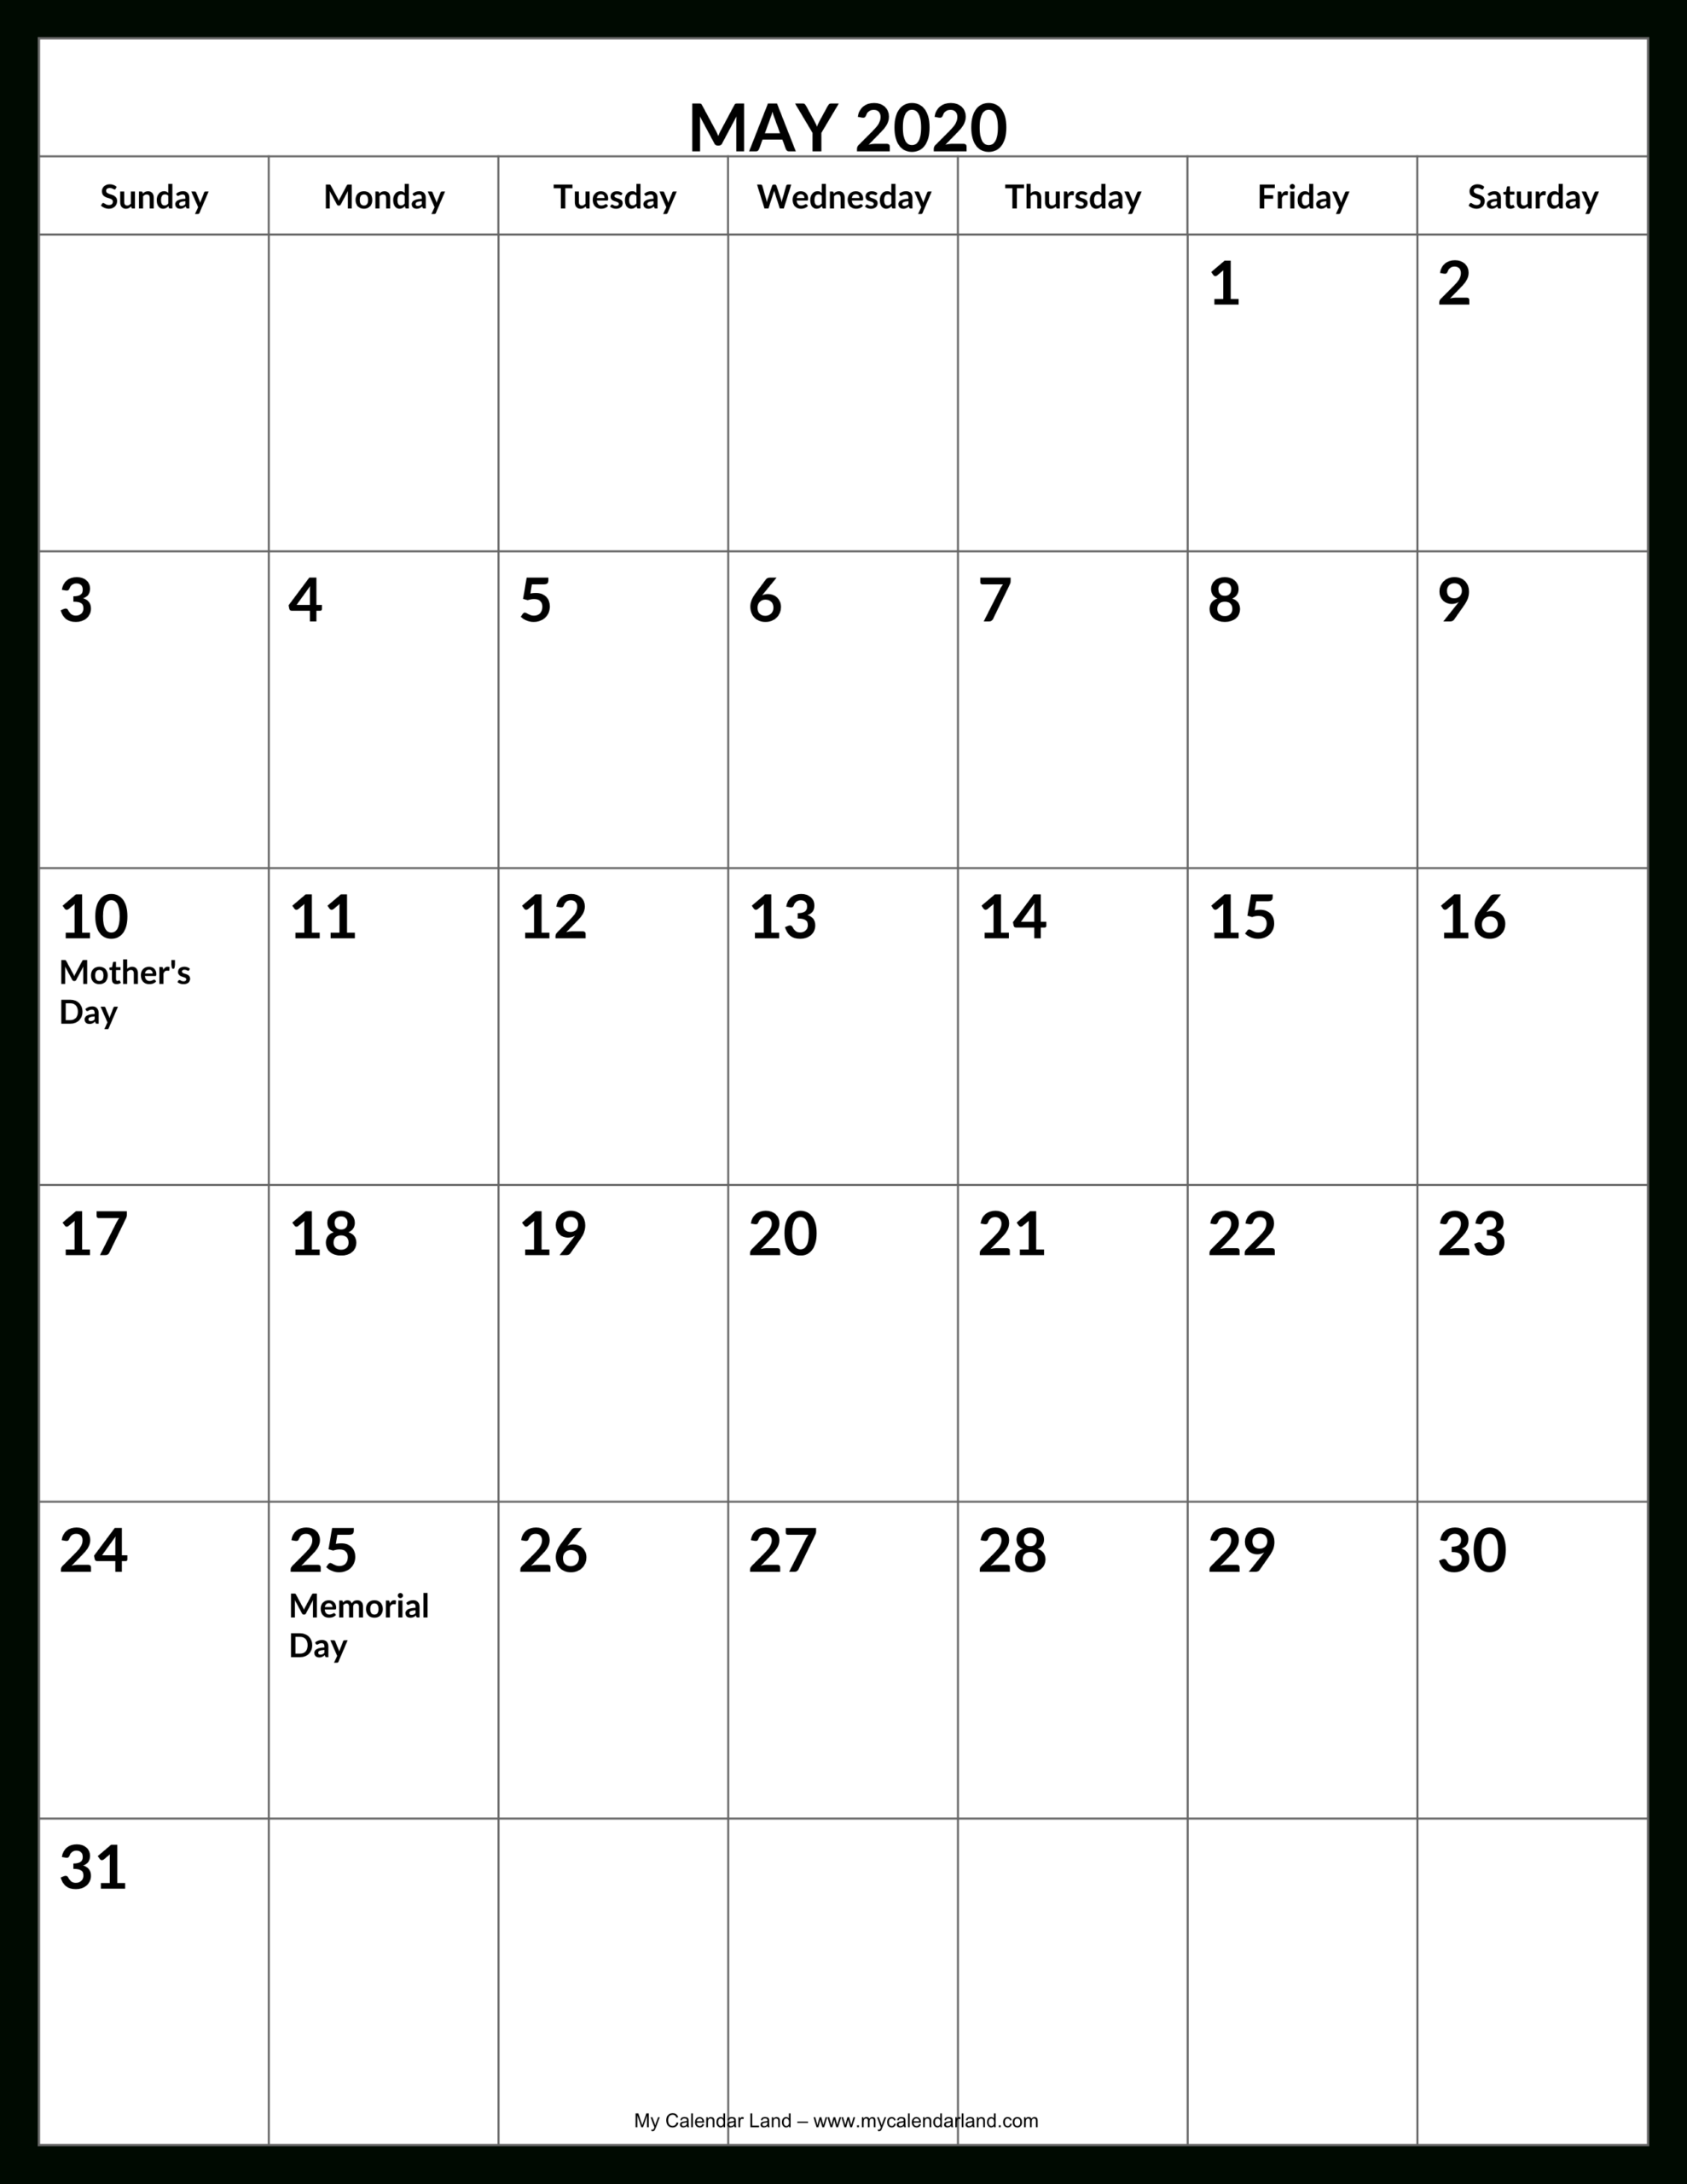 May 2020 Calendar - My Calendar Land